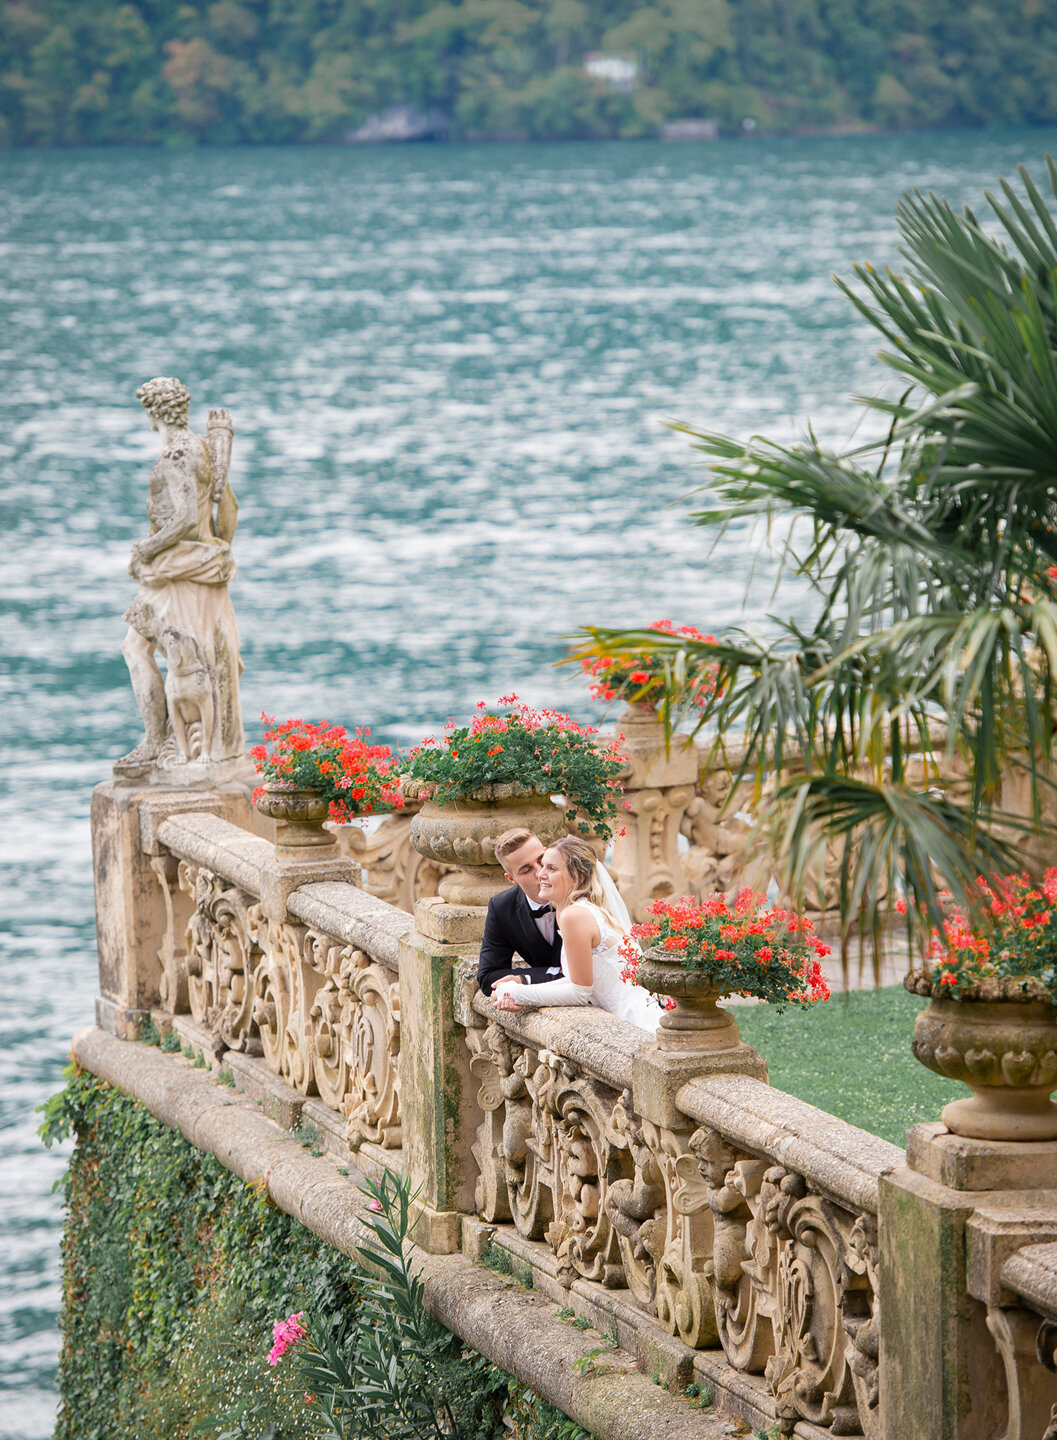 The couple on the villa's terrace